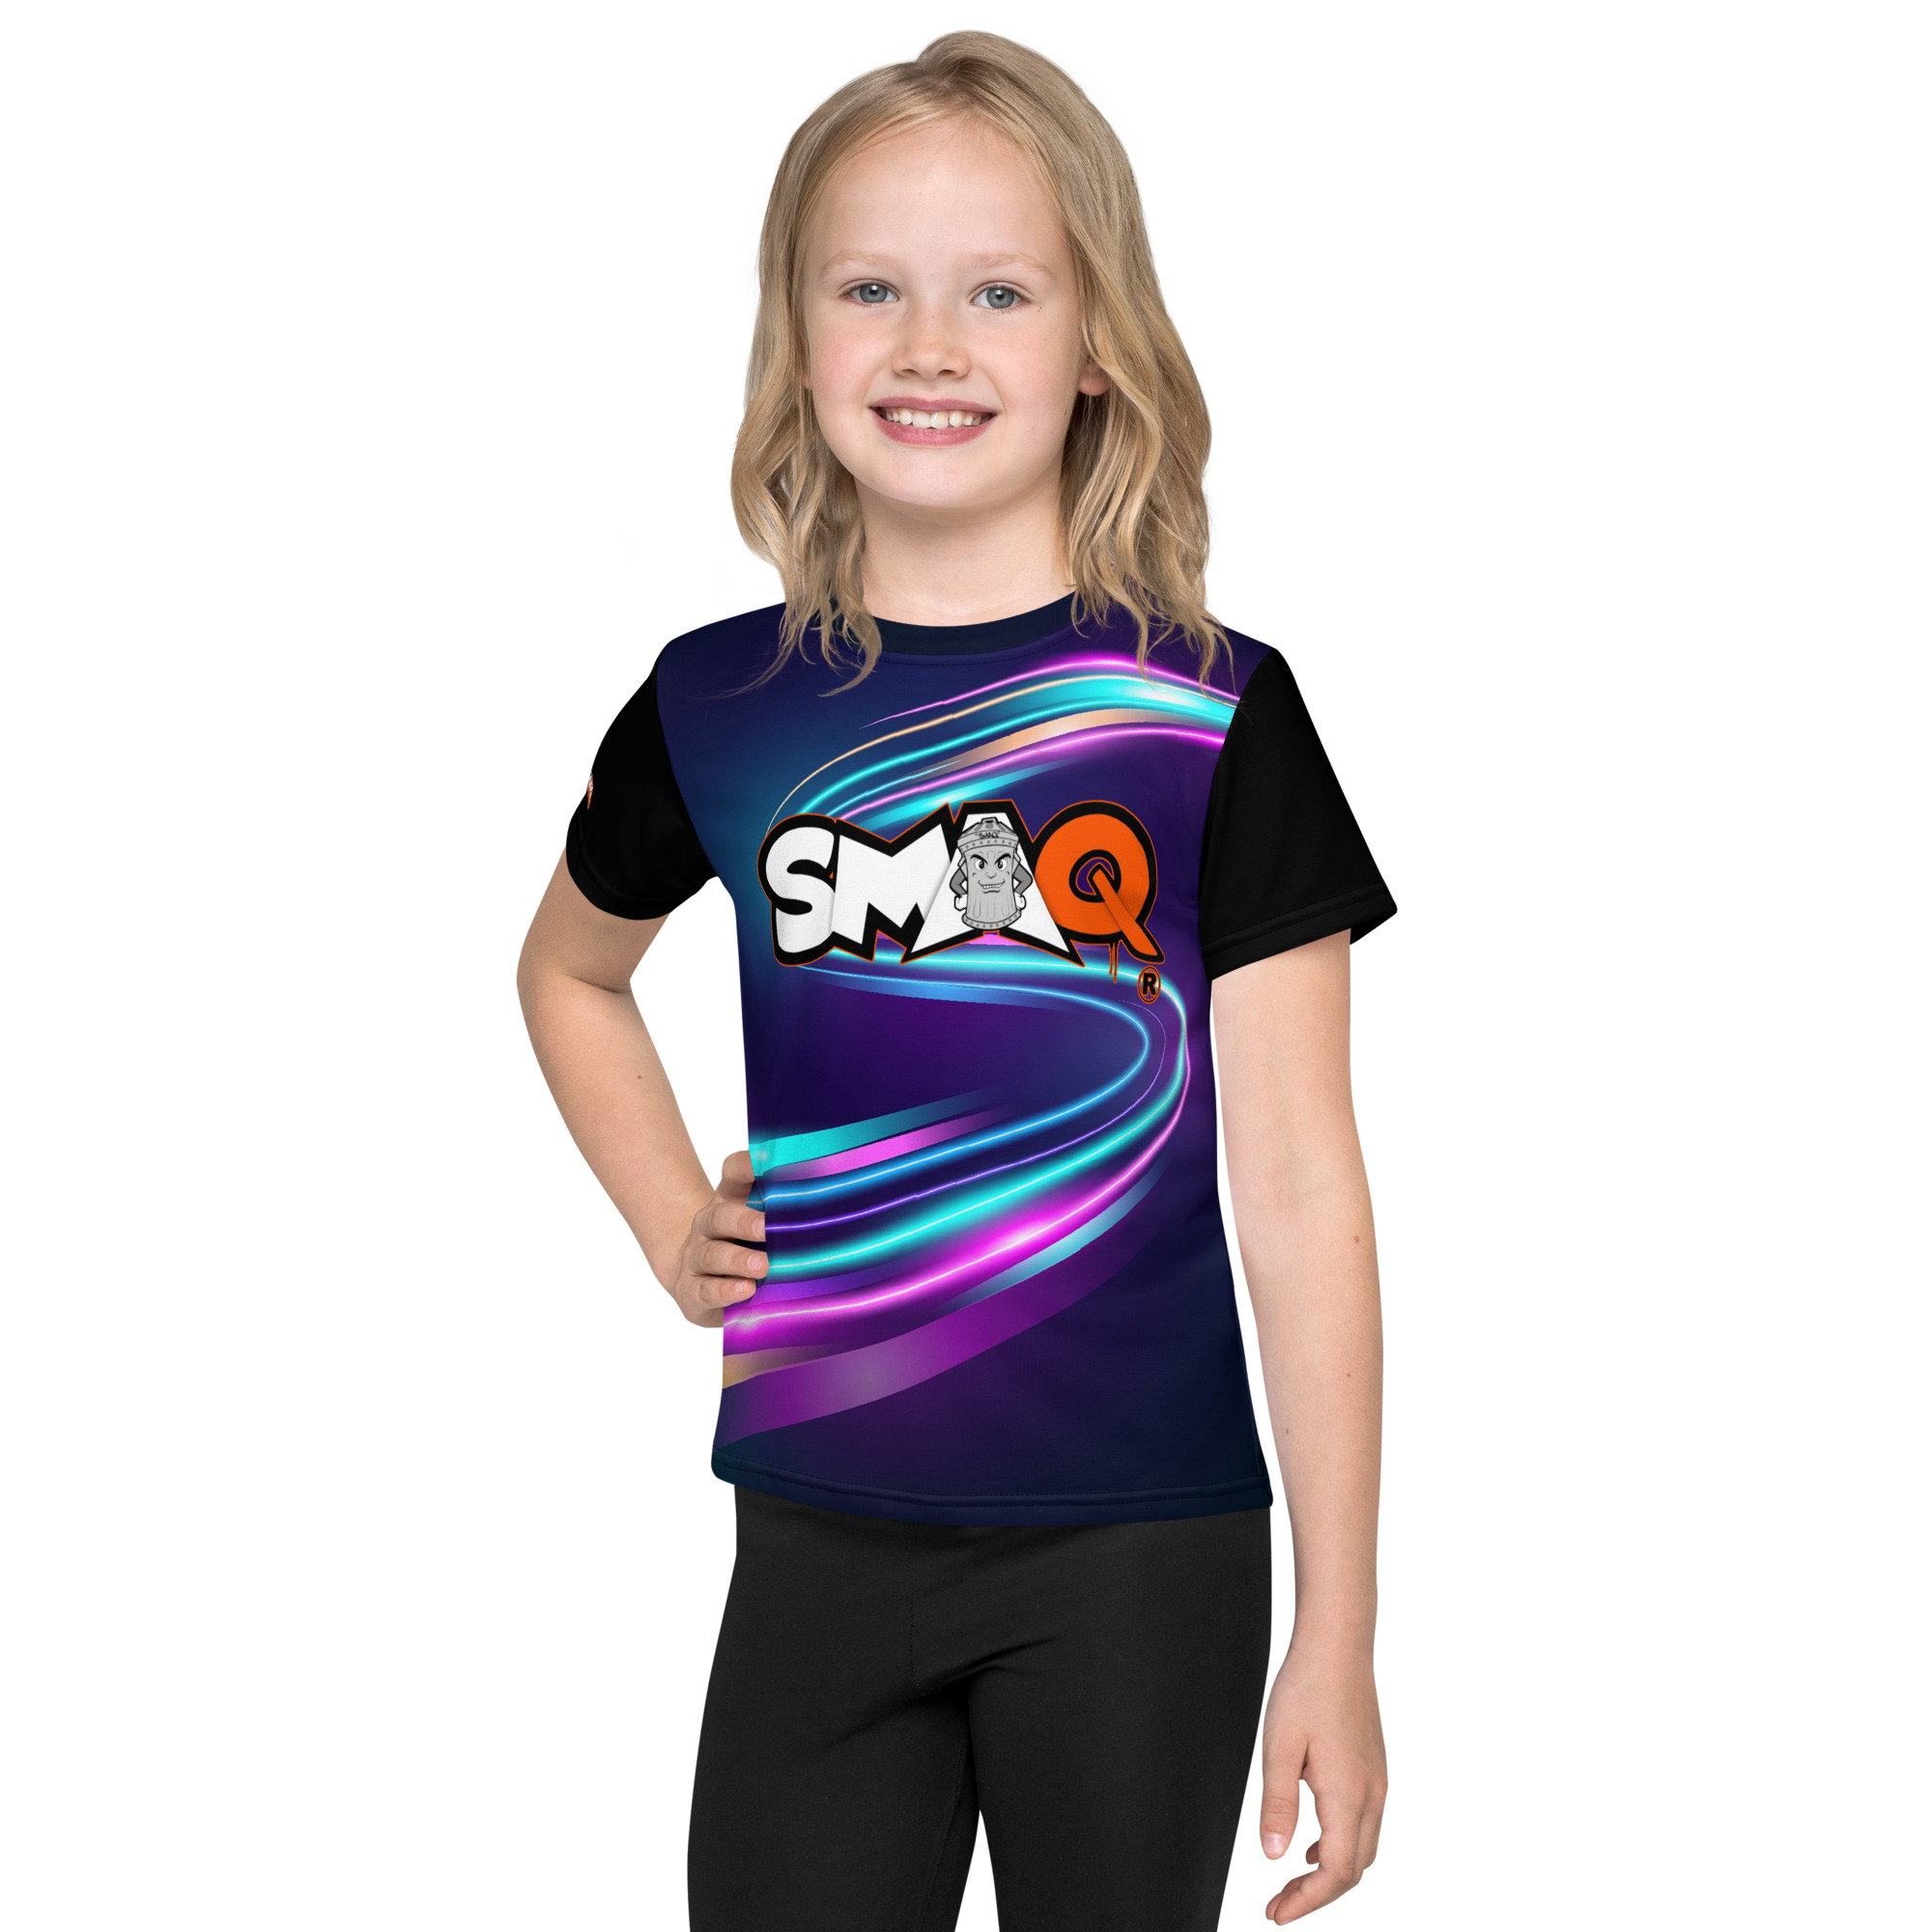 SMAQ Neon Graffiti Kids crew neck t-shirt